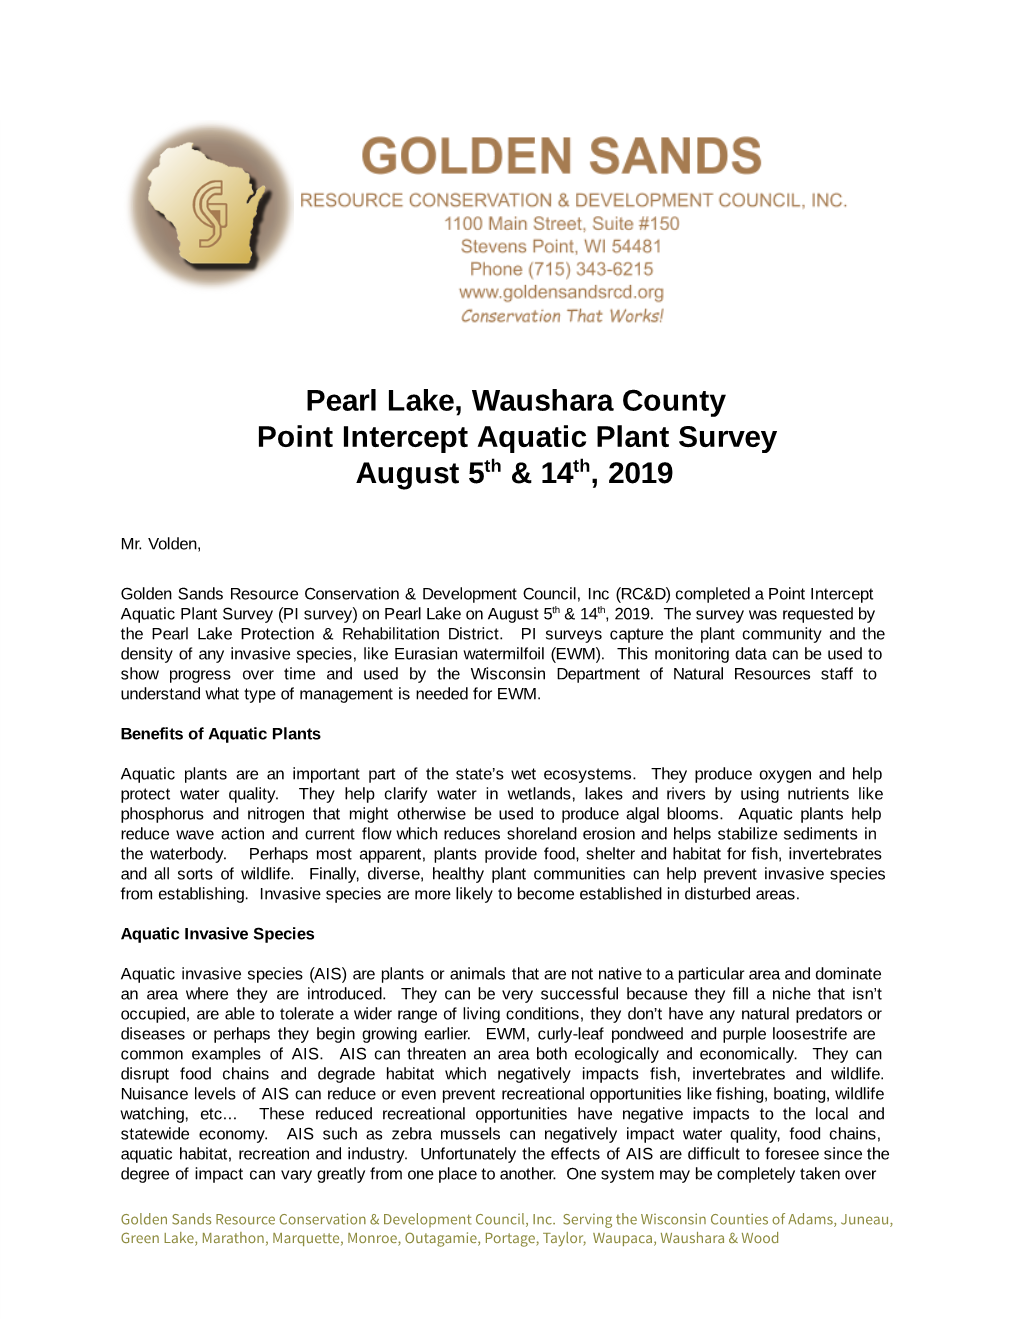 Pearl Lake, Waushara County Point Intercept Aquatic Plant Survey August 5 Th & 14 Th, 2019